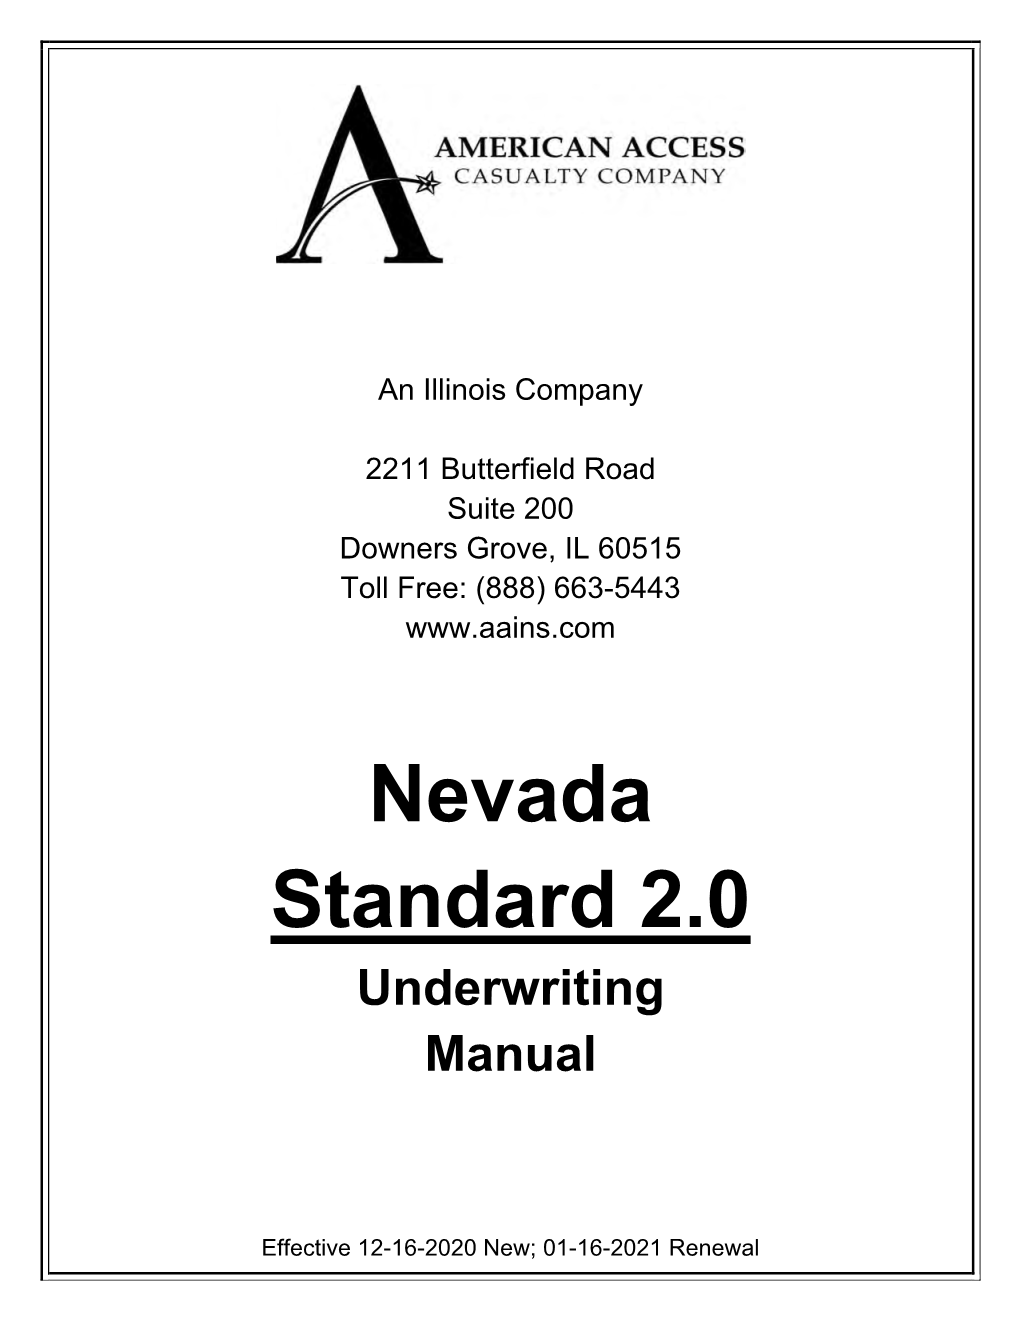 Nevada Standard 2.0 Underwriting Manual